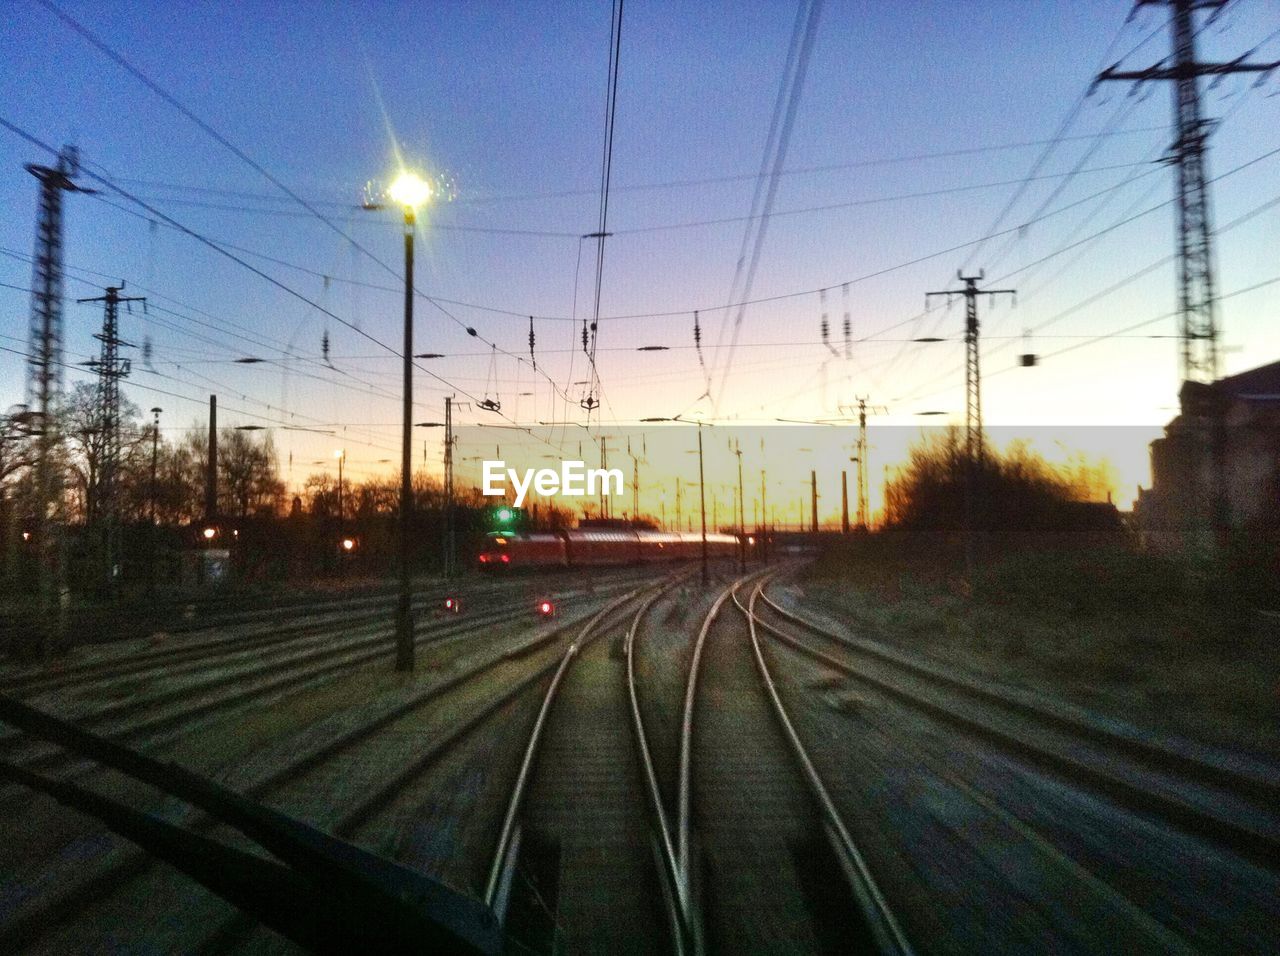 View of railroad tracks through train windshield